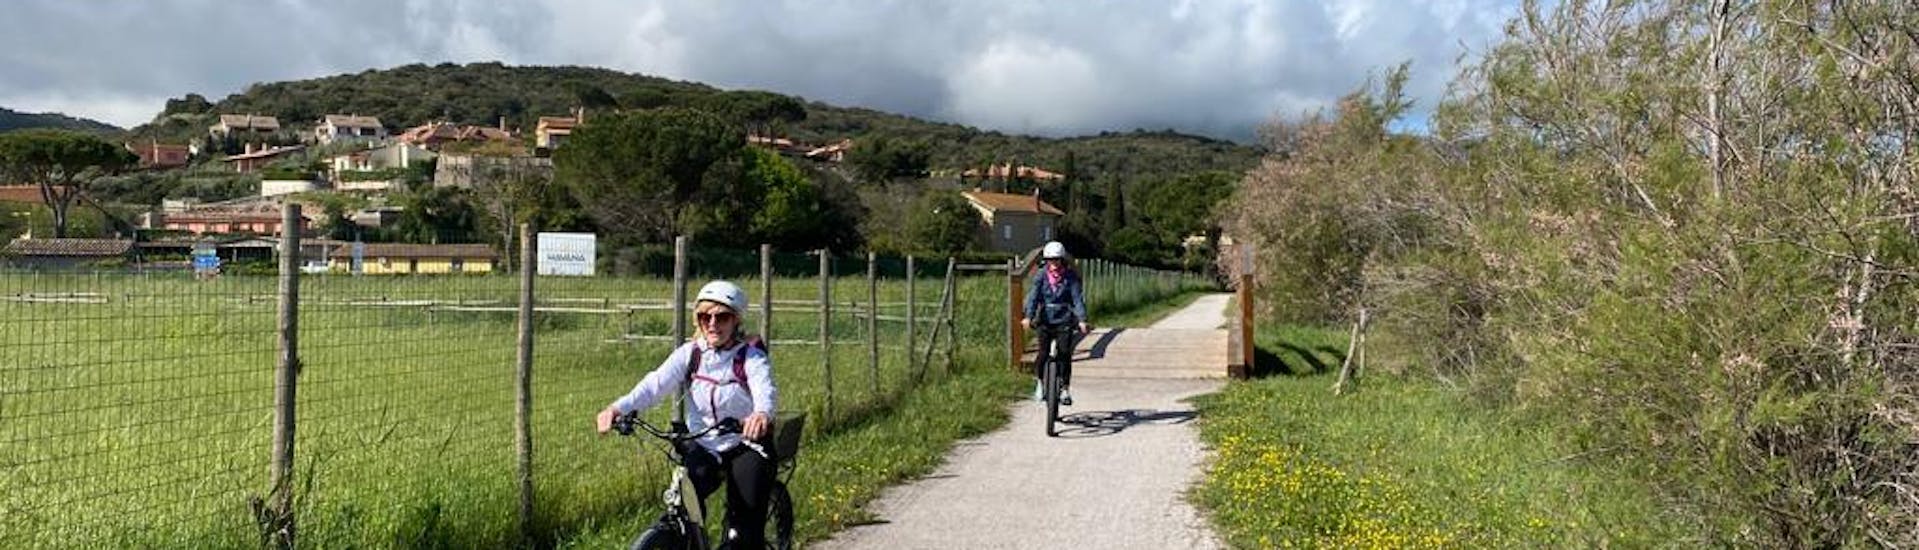 E-City Bike Tour in de Toscaanse Maremma.